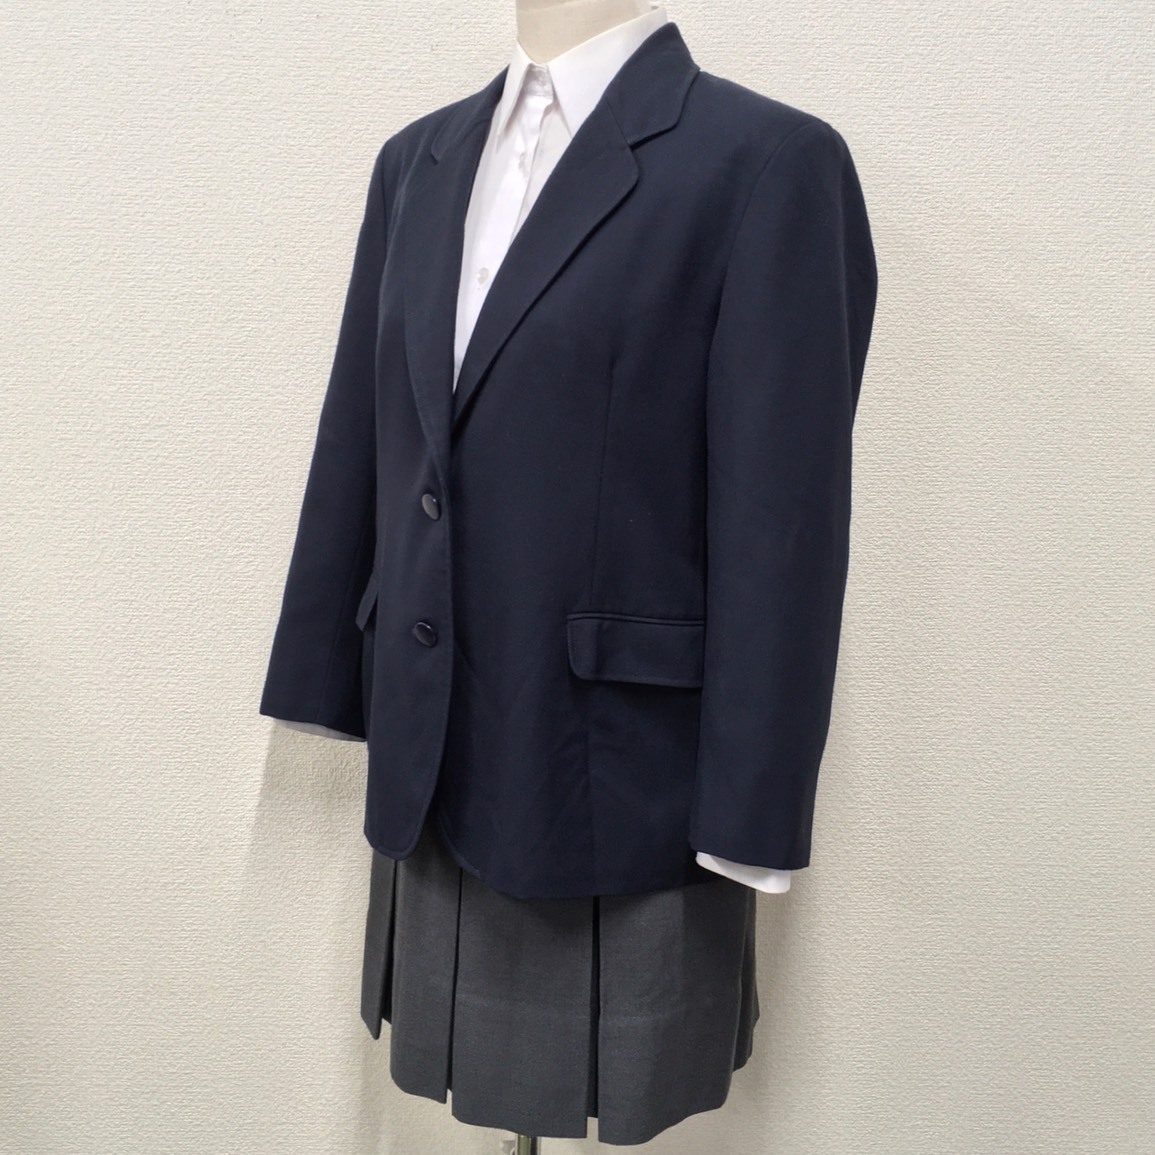 A365 ( used ) school uniform 3 point set /165/4/L/W68/ height 49.5/SCHOOLWEAR/ blaser / skirt / blouse / winter clothes / uniform / junior high school / high school / woman student / student / school uniform 